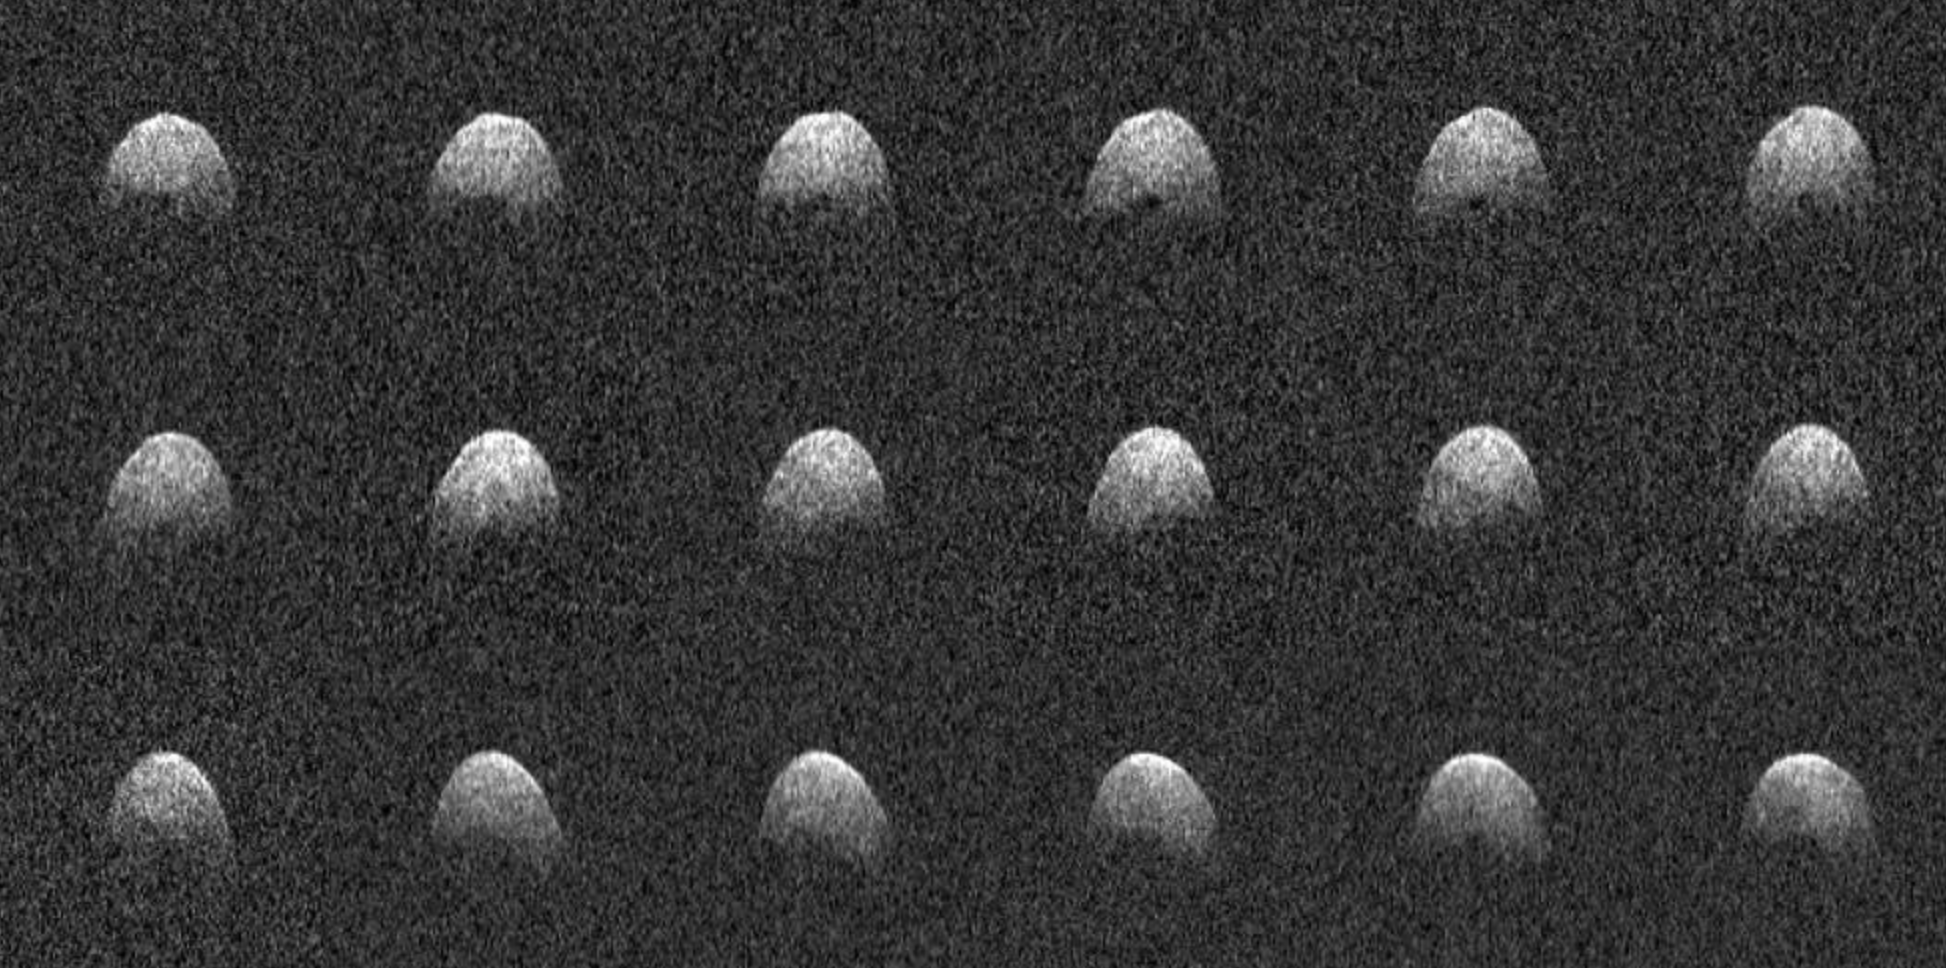 Fotografije asteroida Phaethon